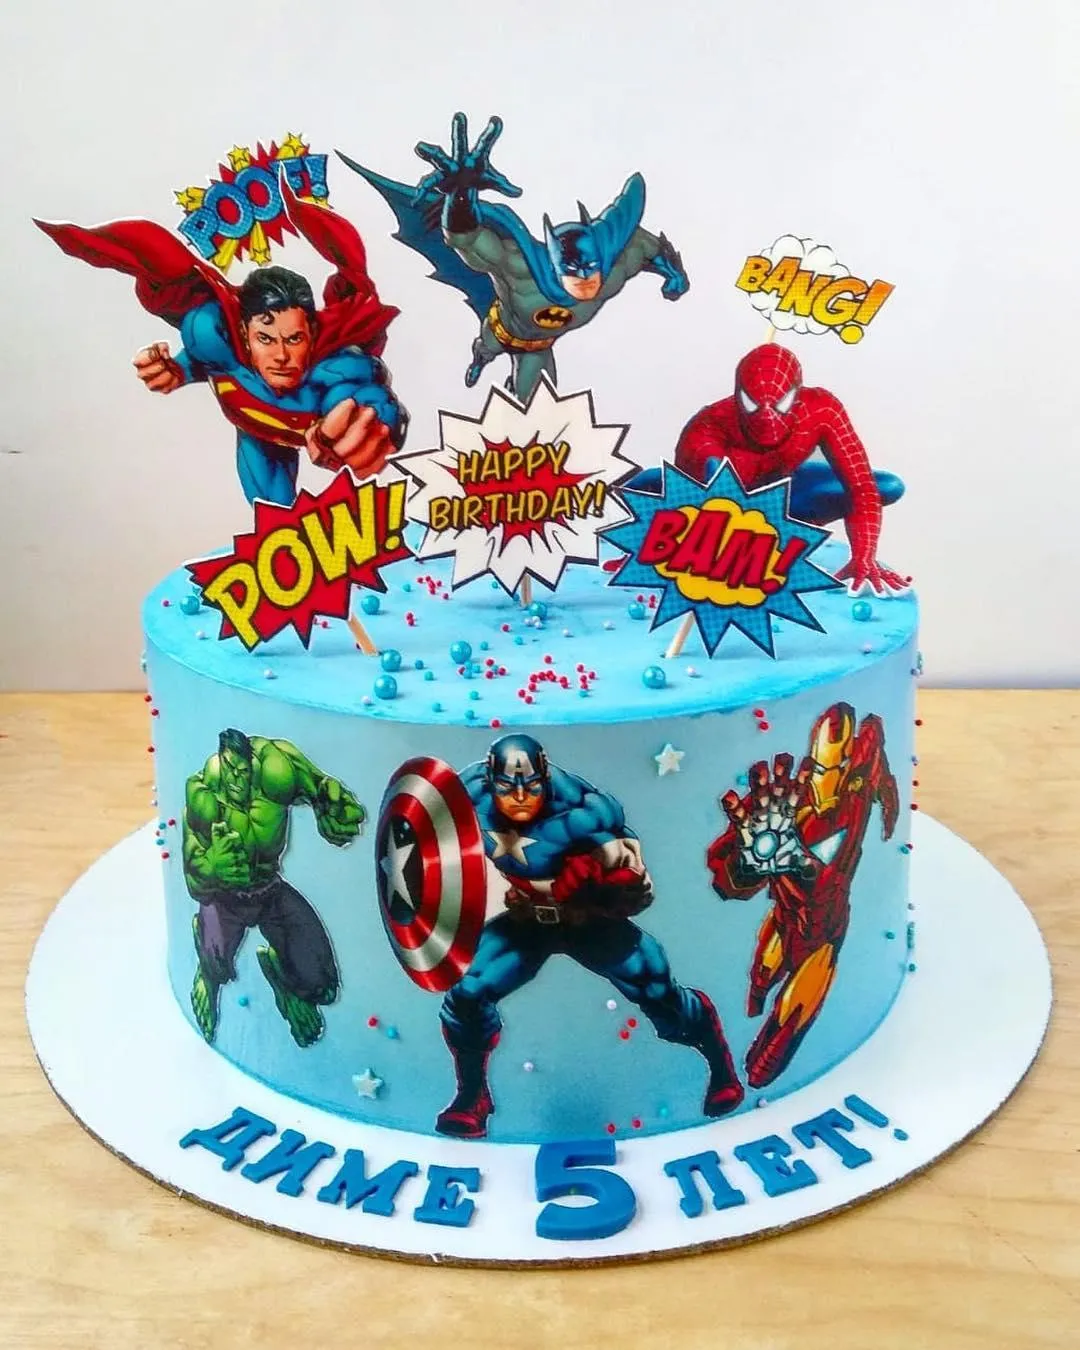 Торт "Супергерои"